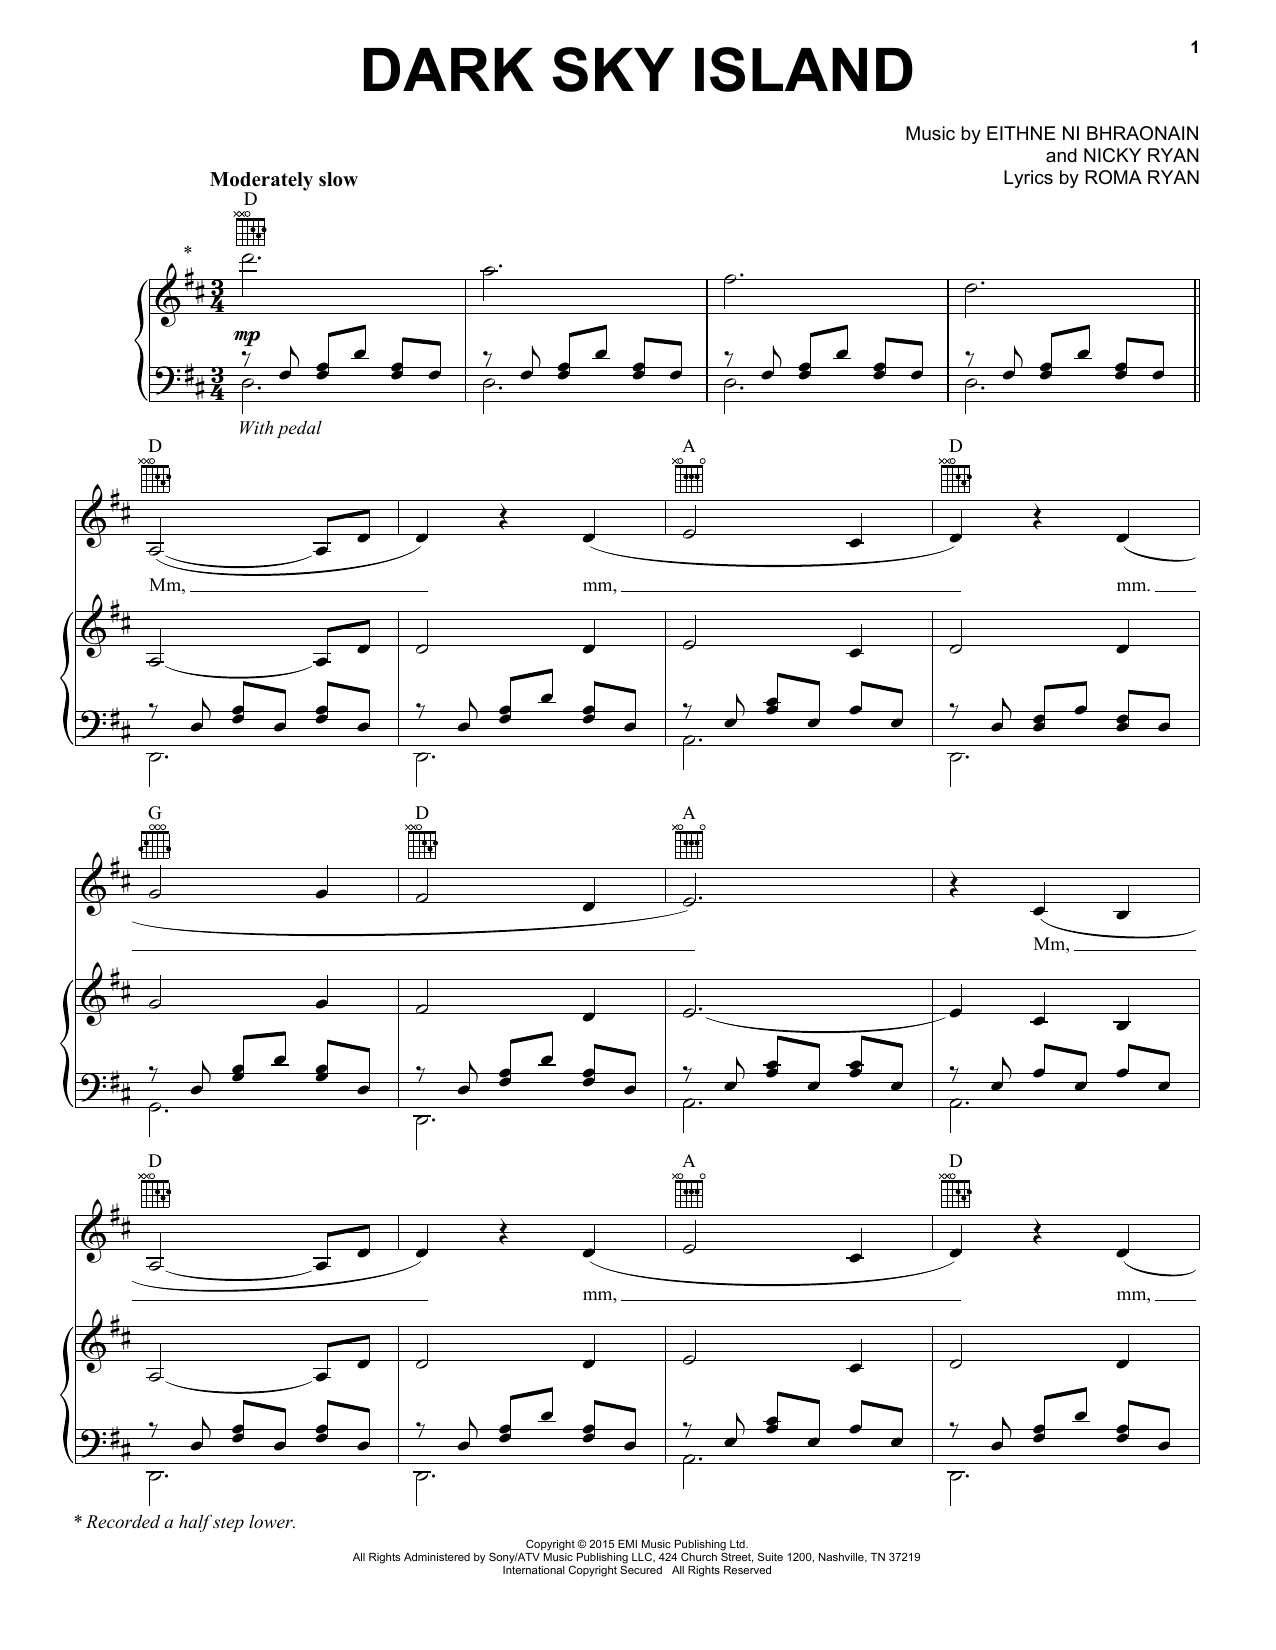 Enya Dark Sky Island Sheet Music Notes & Chords for Piano, Vocal & Guitar (Right-Hand Melody) - Download or Print PDF